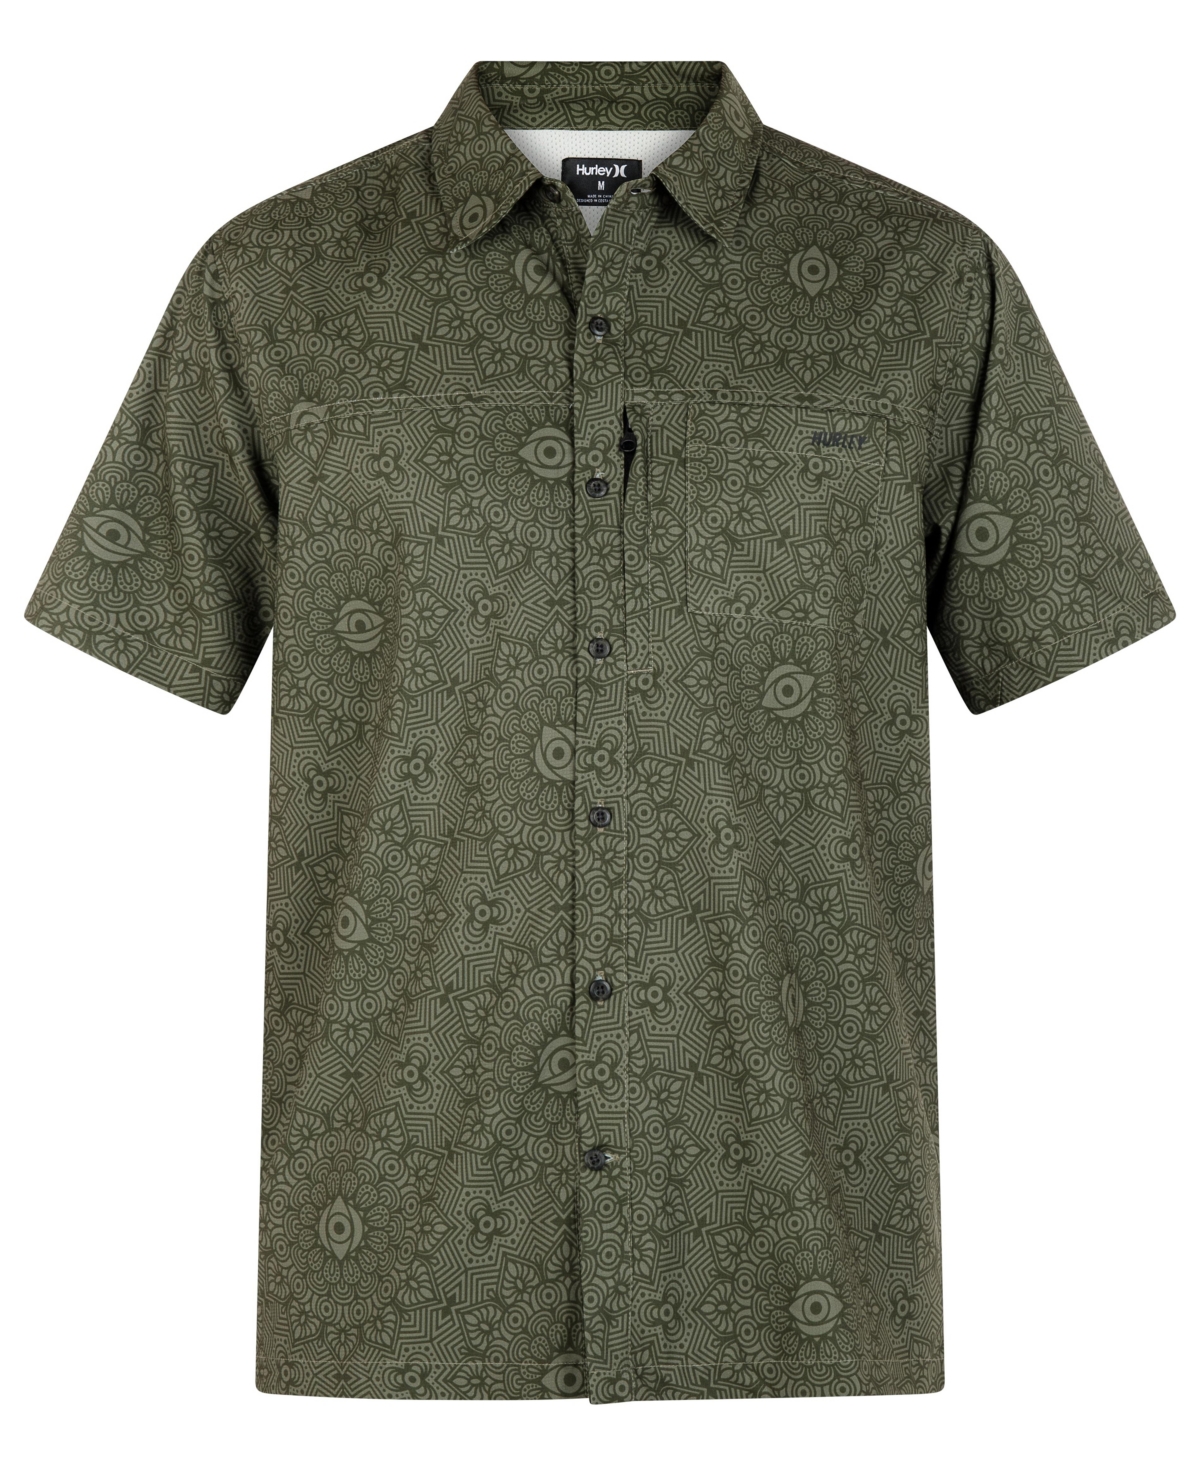 Men's H2O-Dri Rincon Sierra Short Sleeves Shirt - Olive